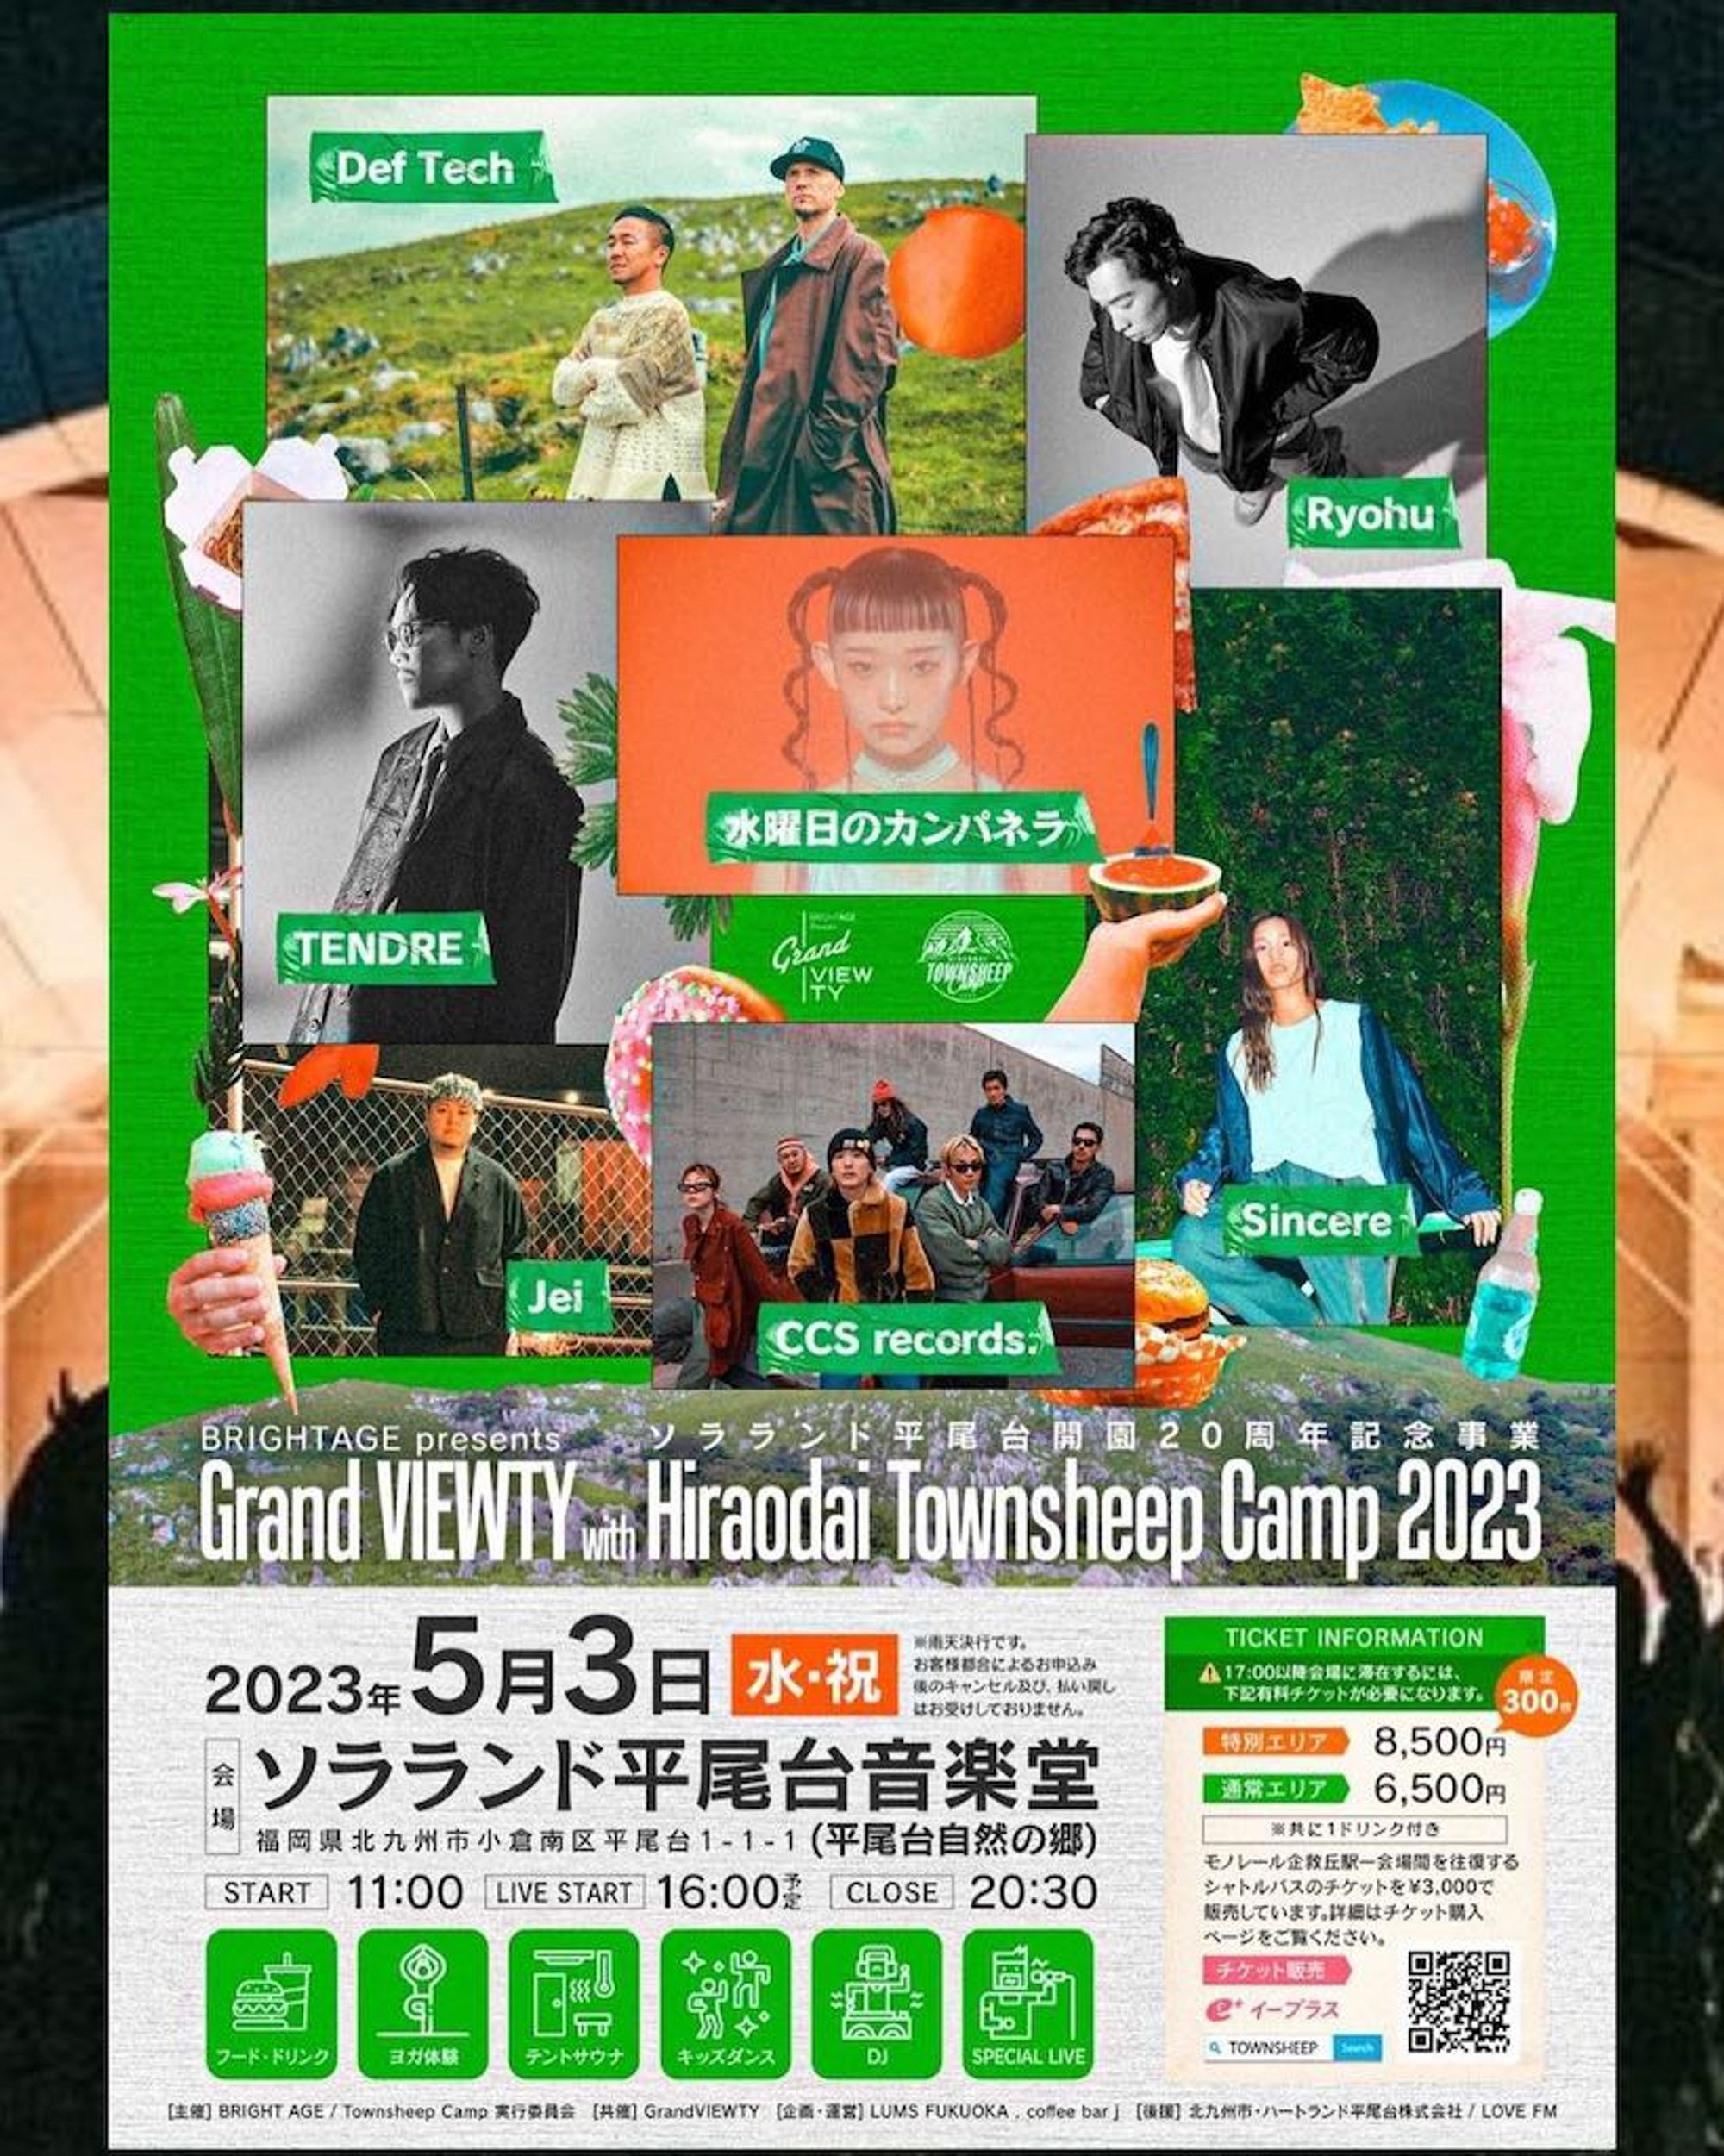 BRIGHTAGE presents Grand VIEWTY with Hiraodai Townsheep Camp 2023 @ソラランド平尾台